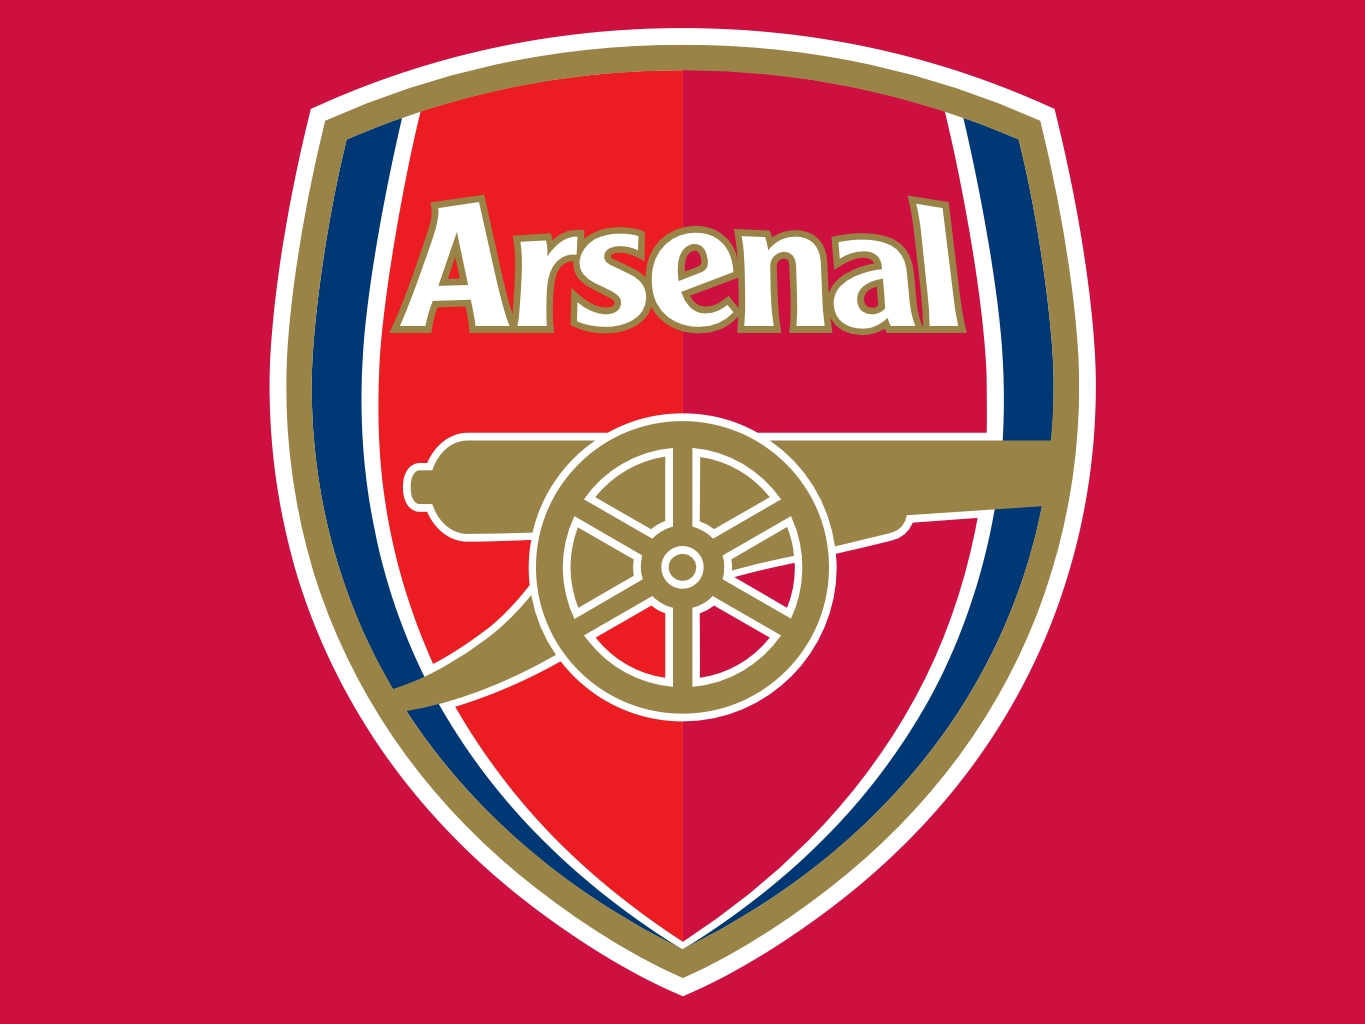 Arsenal Logo Wallpaper Full HD Pictures